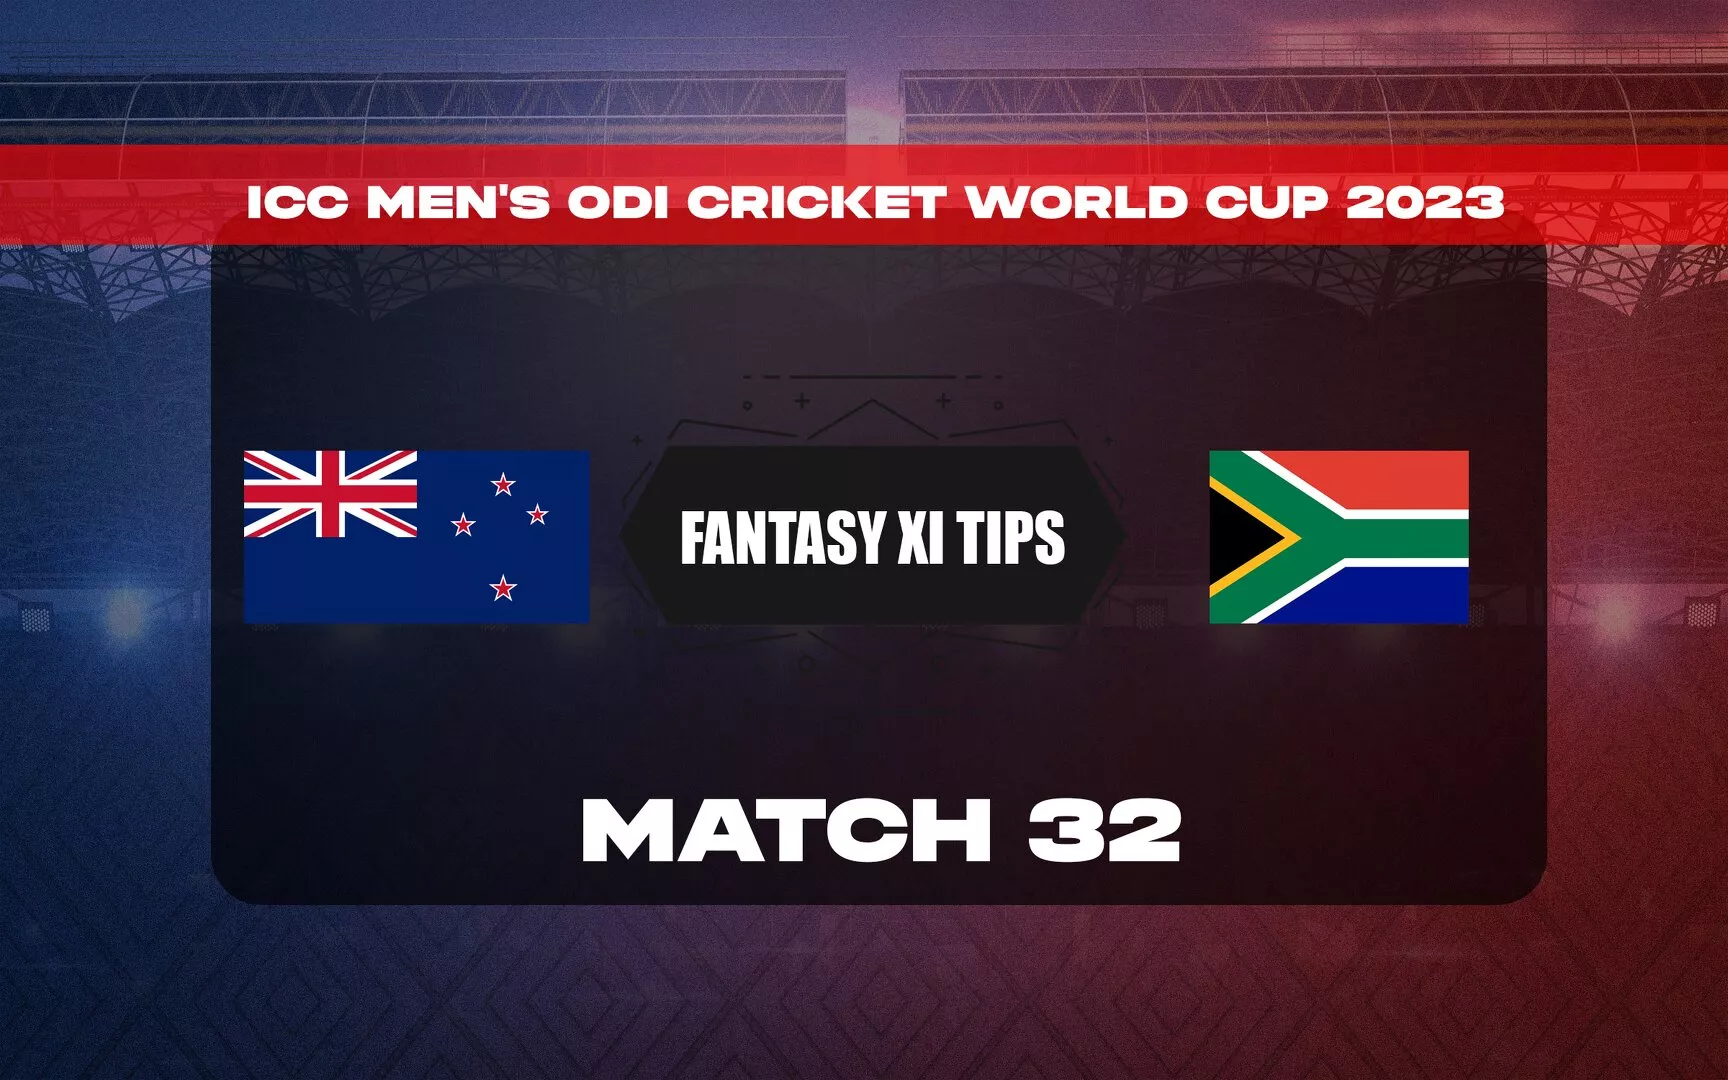 NZ vs SA Dream11 Prediction, Dream11 Playing XI, Today Match 32, ICC Men’s ODI Cricket World Cup 2023